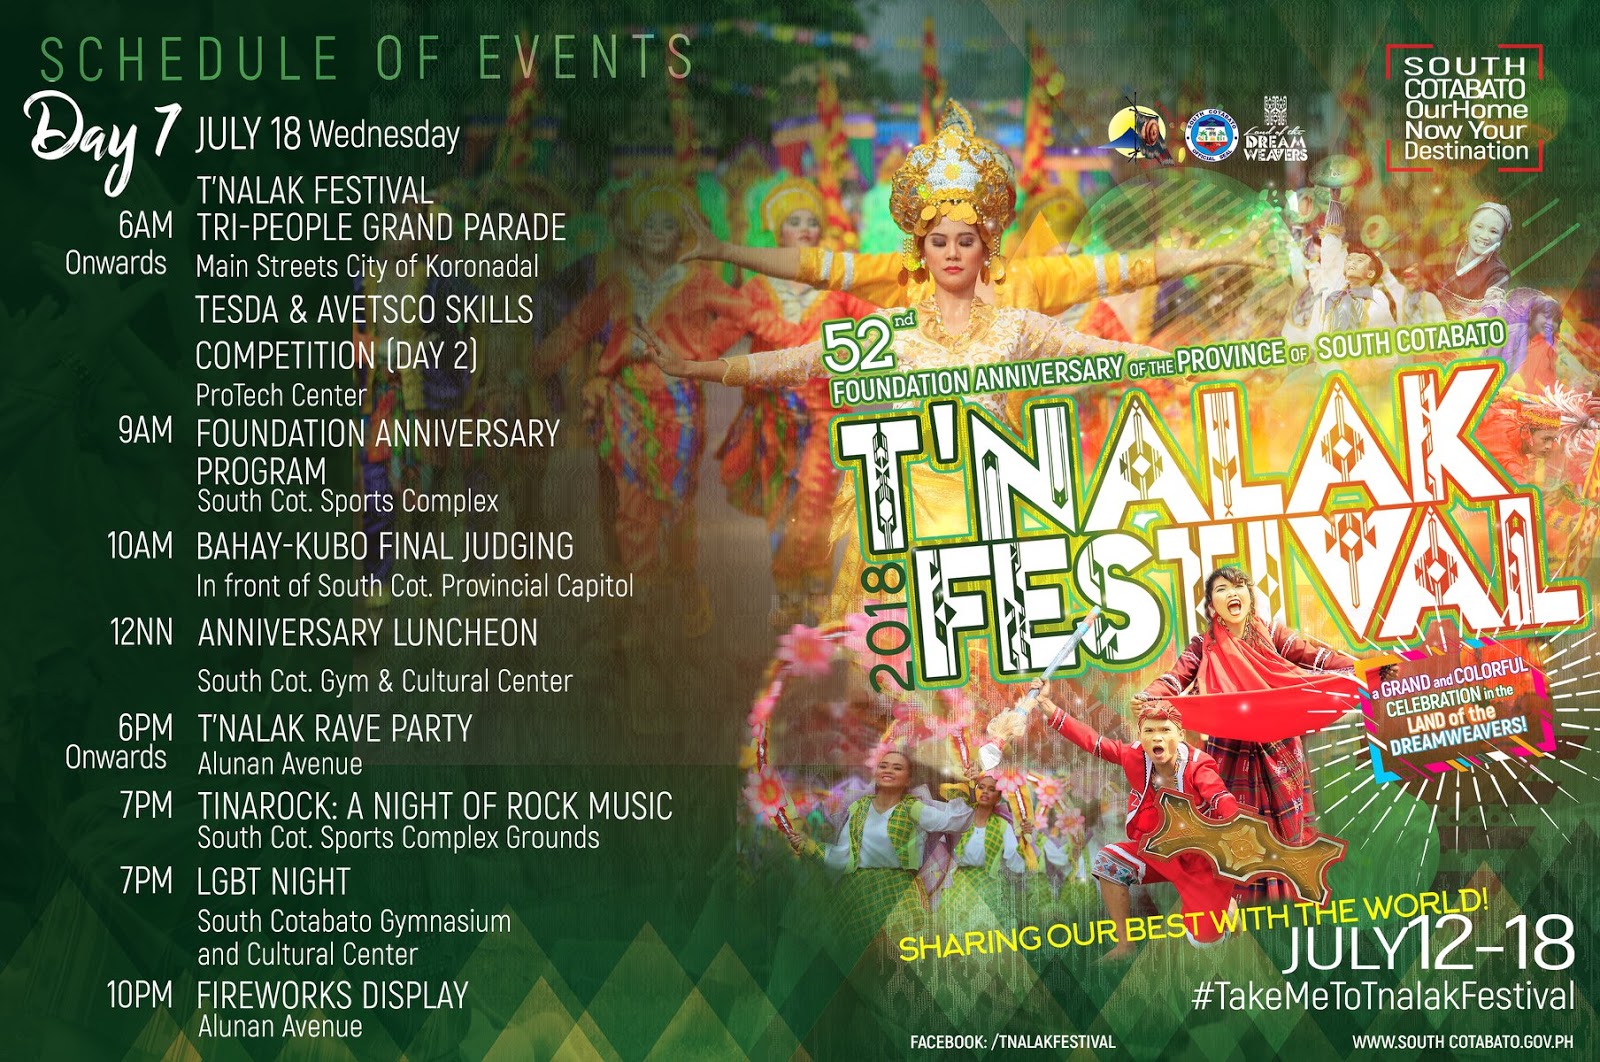 Tnalak Festival na naman! See schedule of activities here